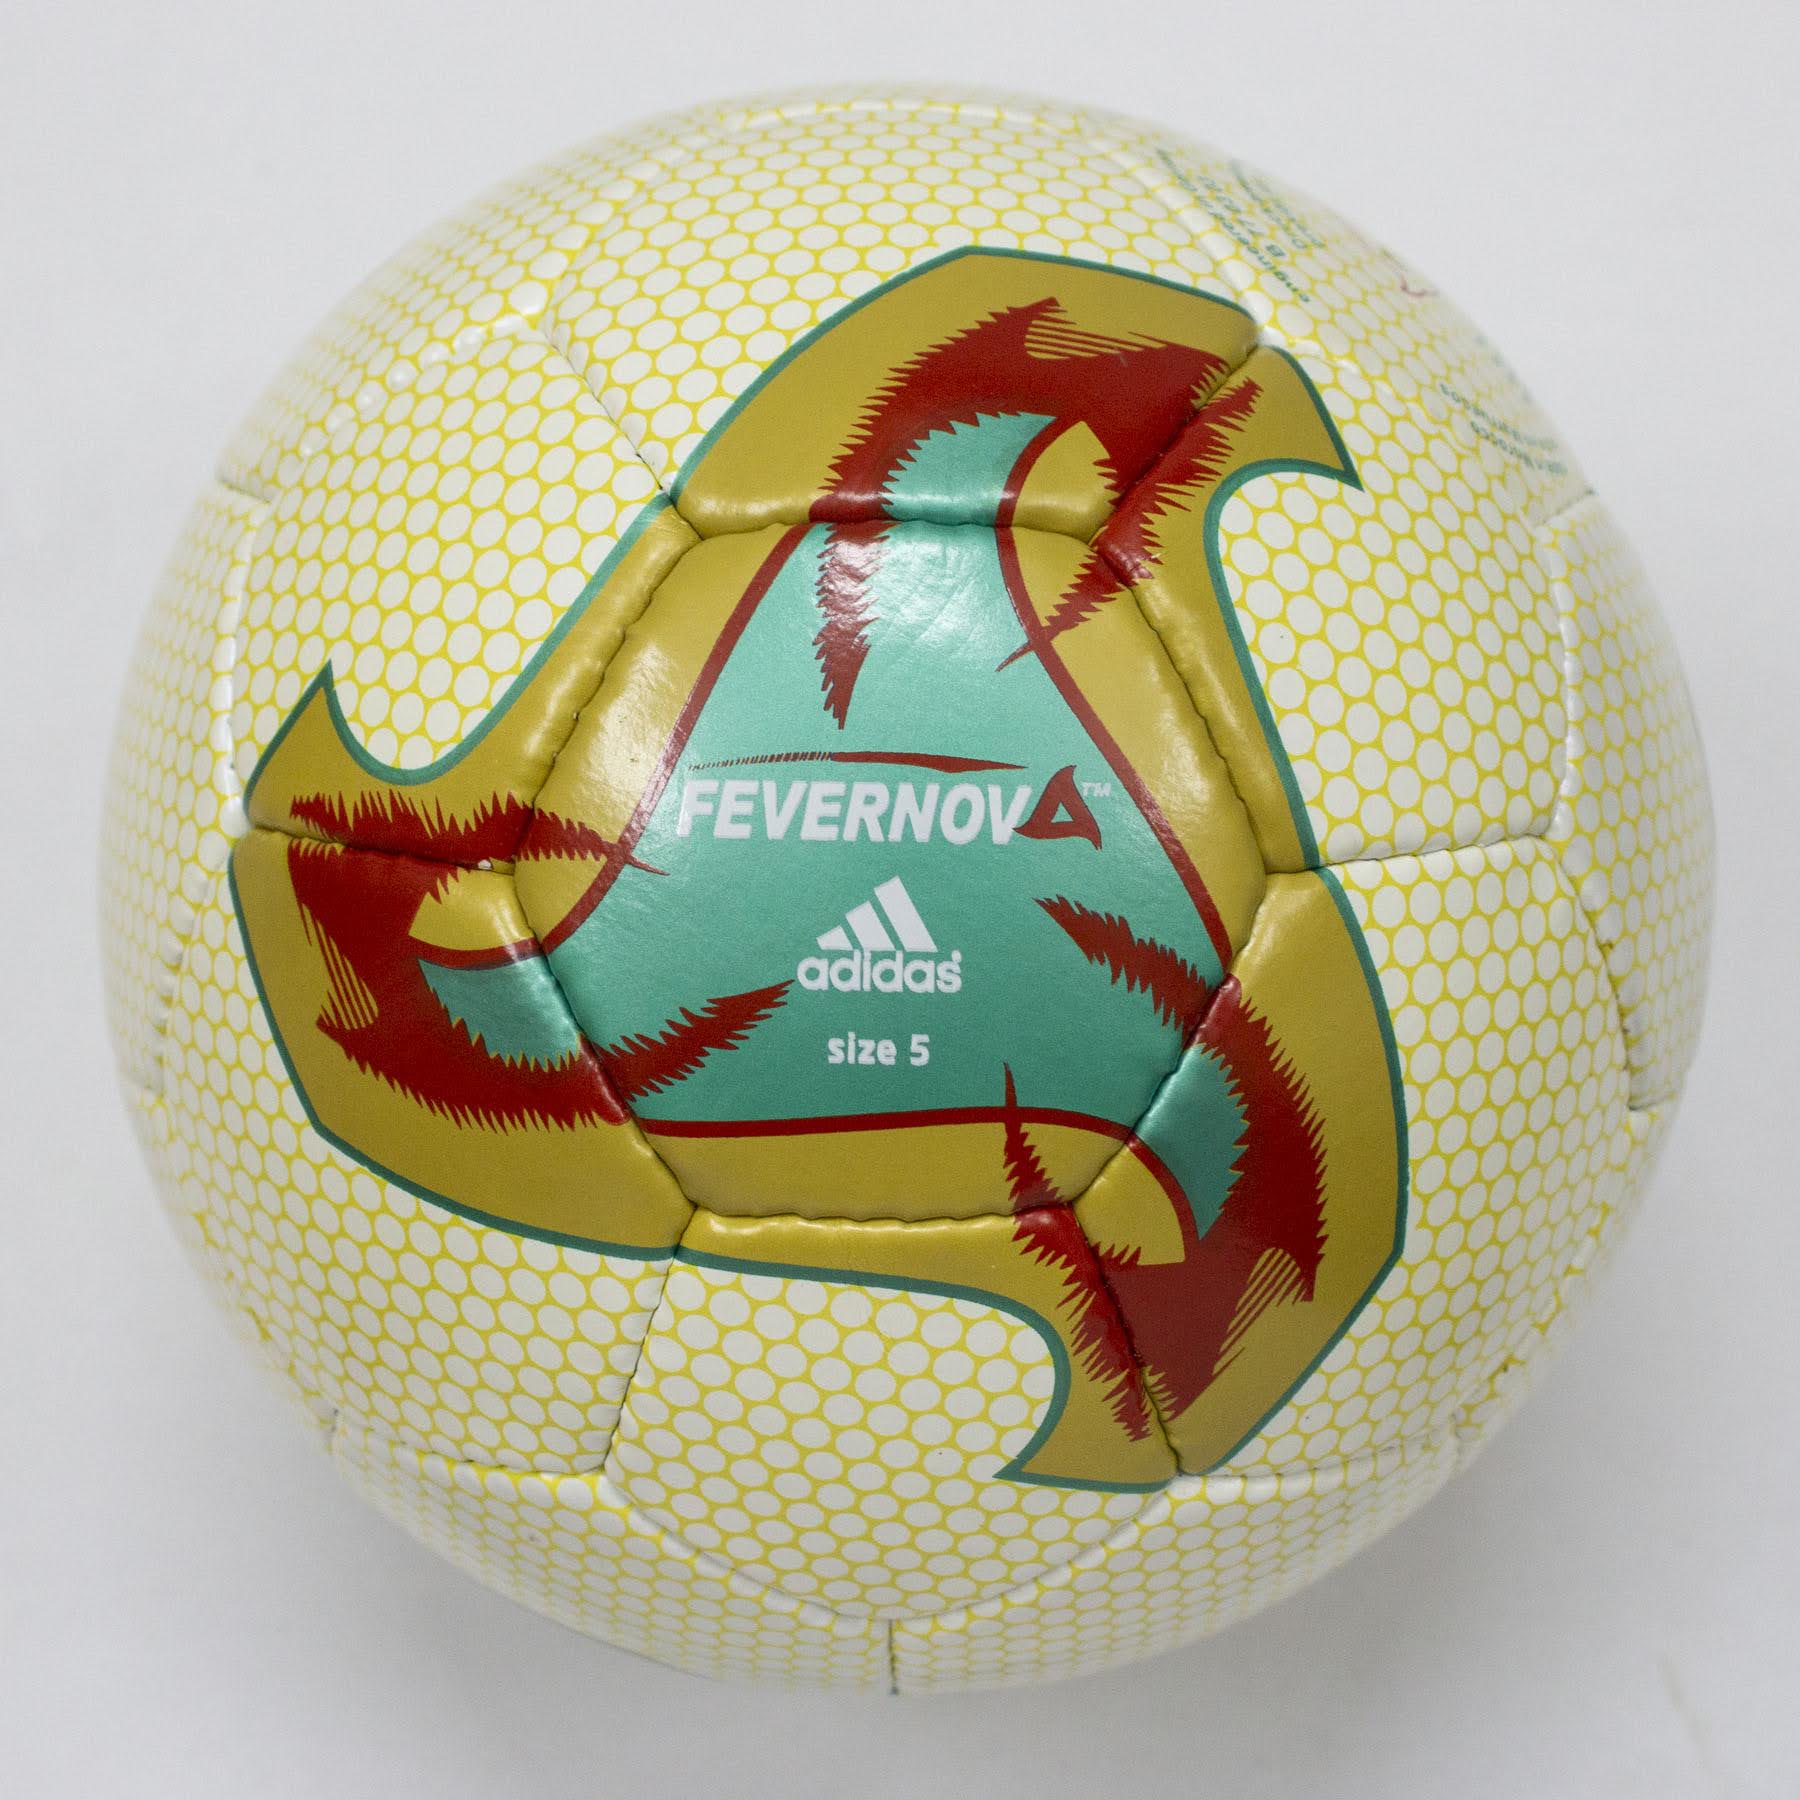 Adidas Fevernova | 2002 FIFA World Cup Ball | Gold Metallic SIZE 5 01